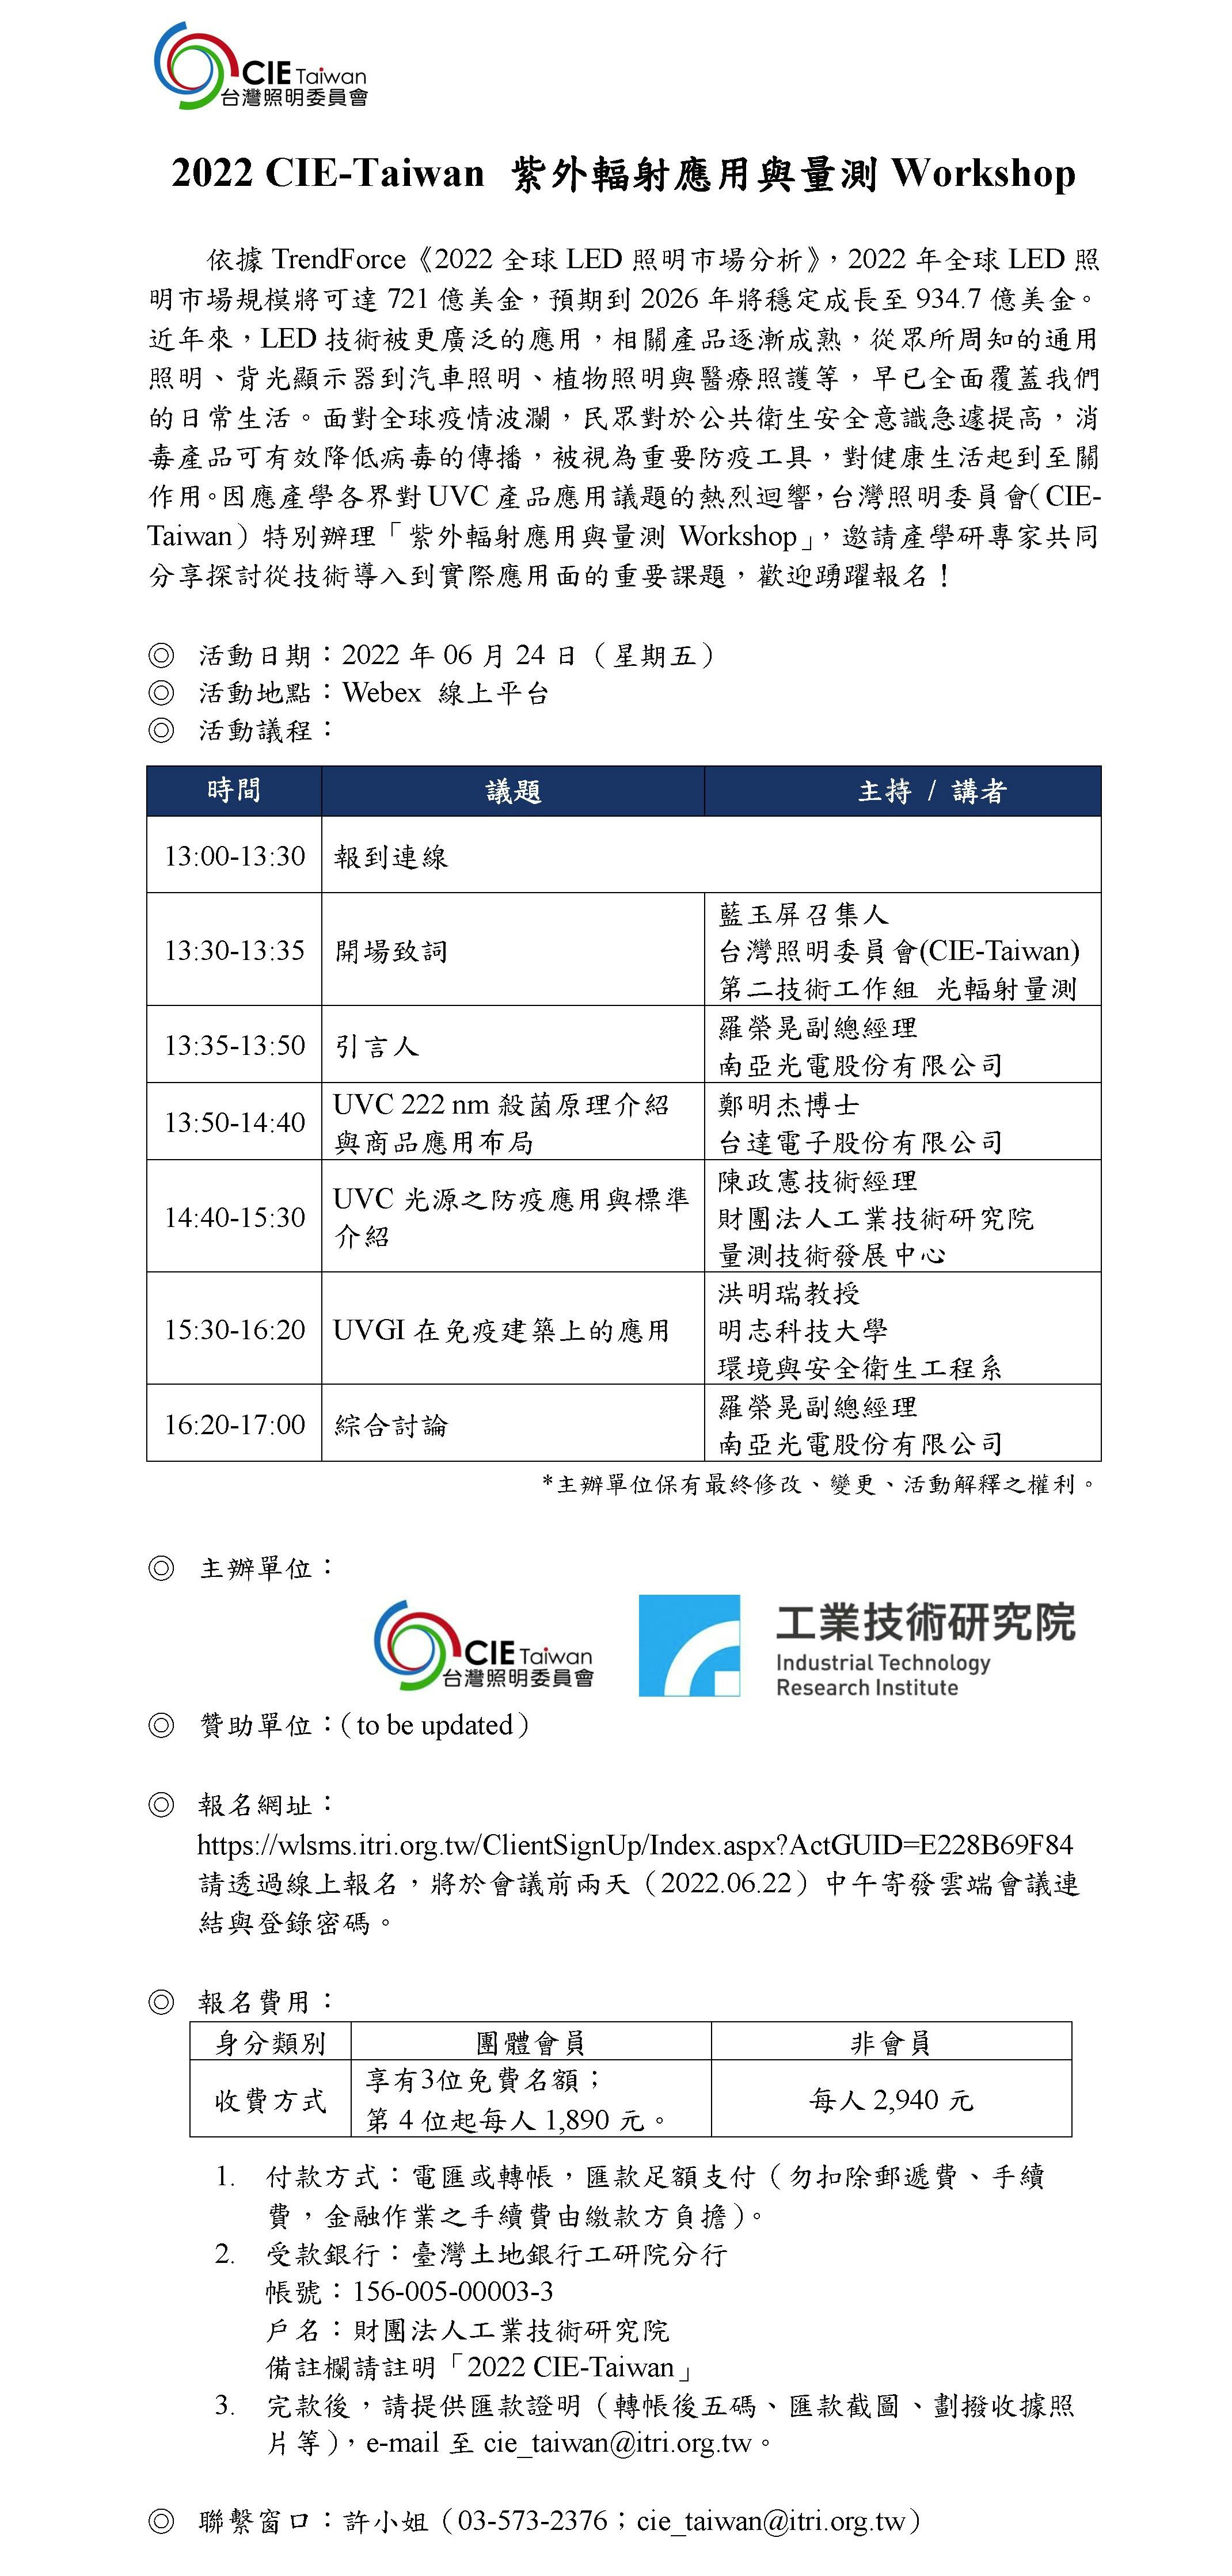 2022 CIE Taiwan 紫外輻射應用與量測Workshop活動說明